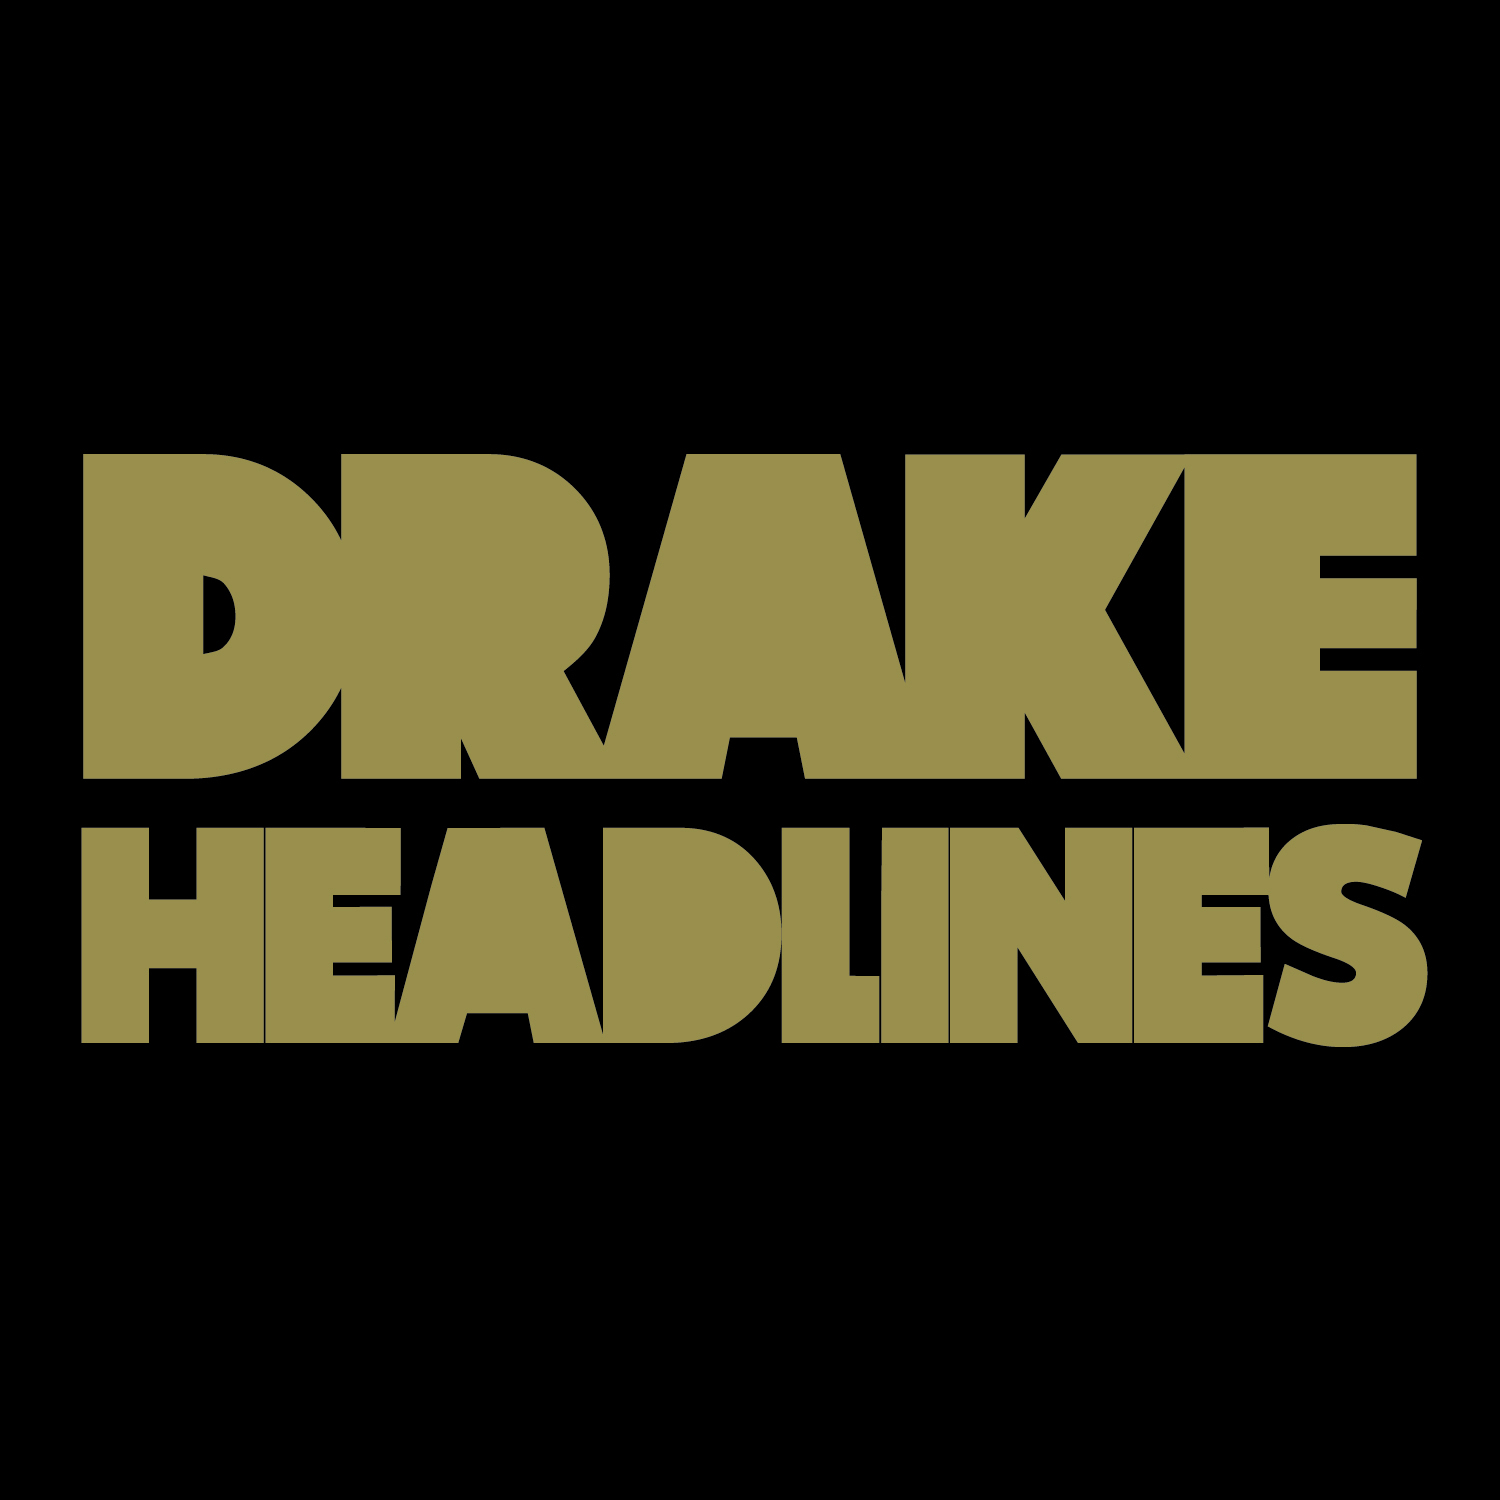 Drake – Headlines